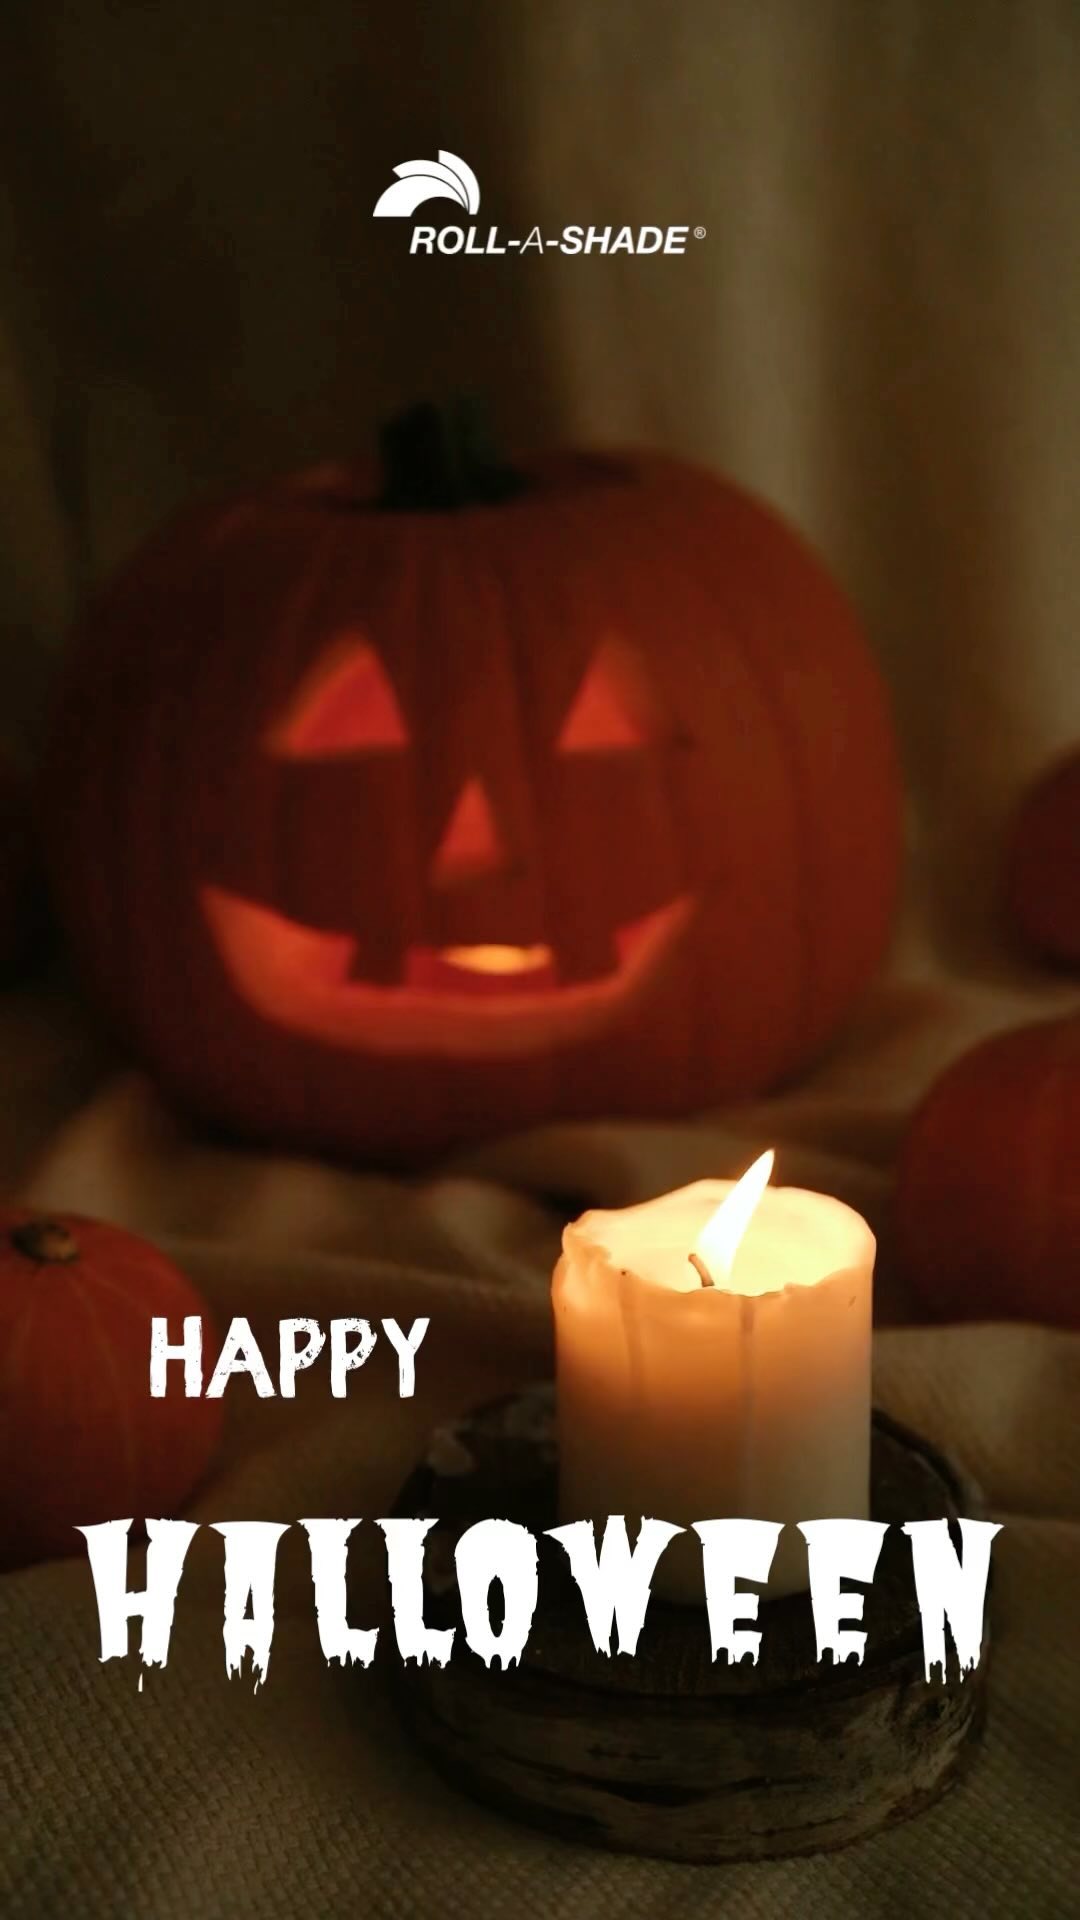 Happy Halloween! 🎃👻 
#spooky #halloween #pumpkincarving #candy #pumpkin